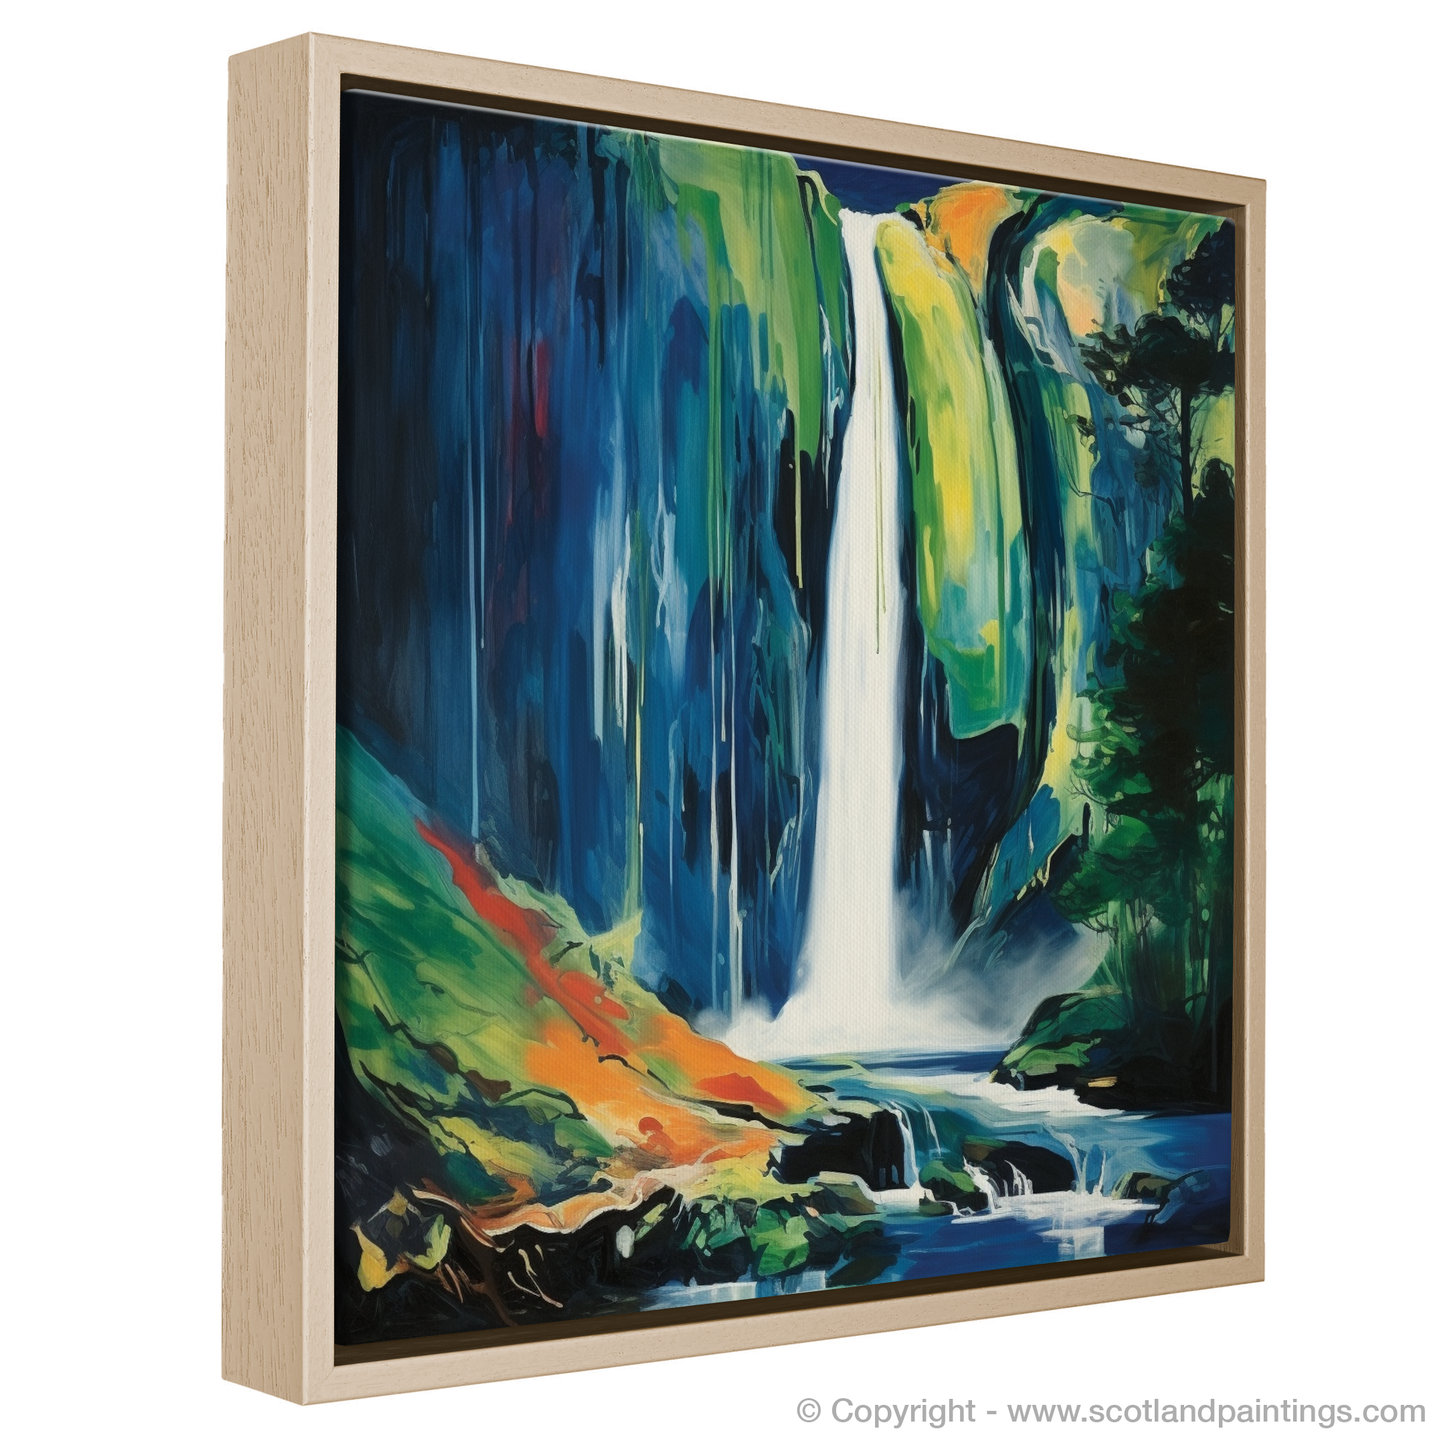 Emerald Cascade: A Color Field Tribute to Bonaloch Falls